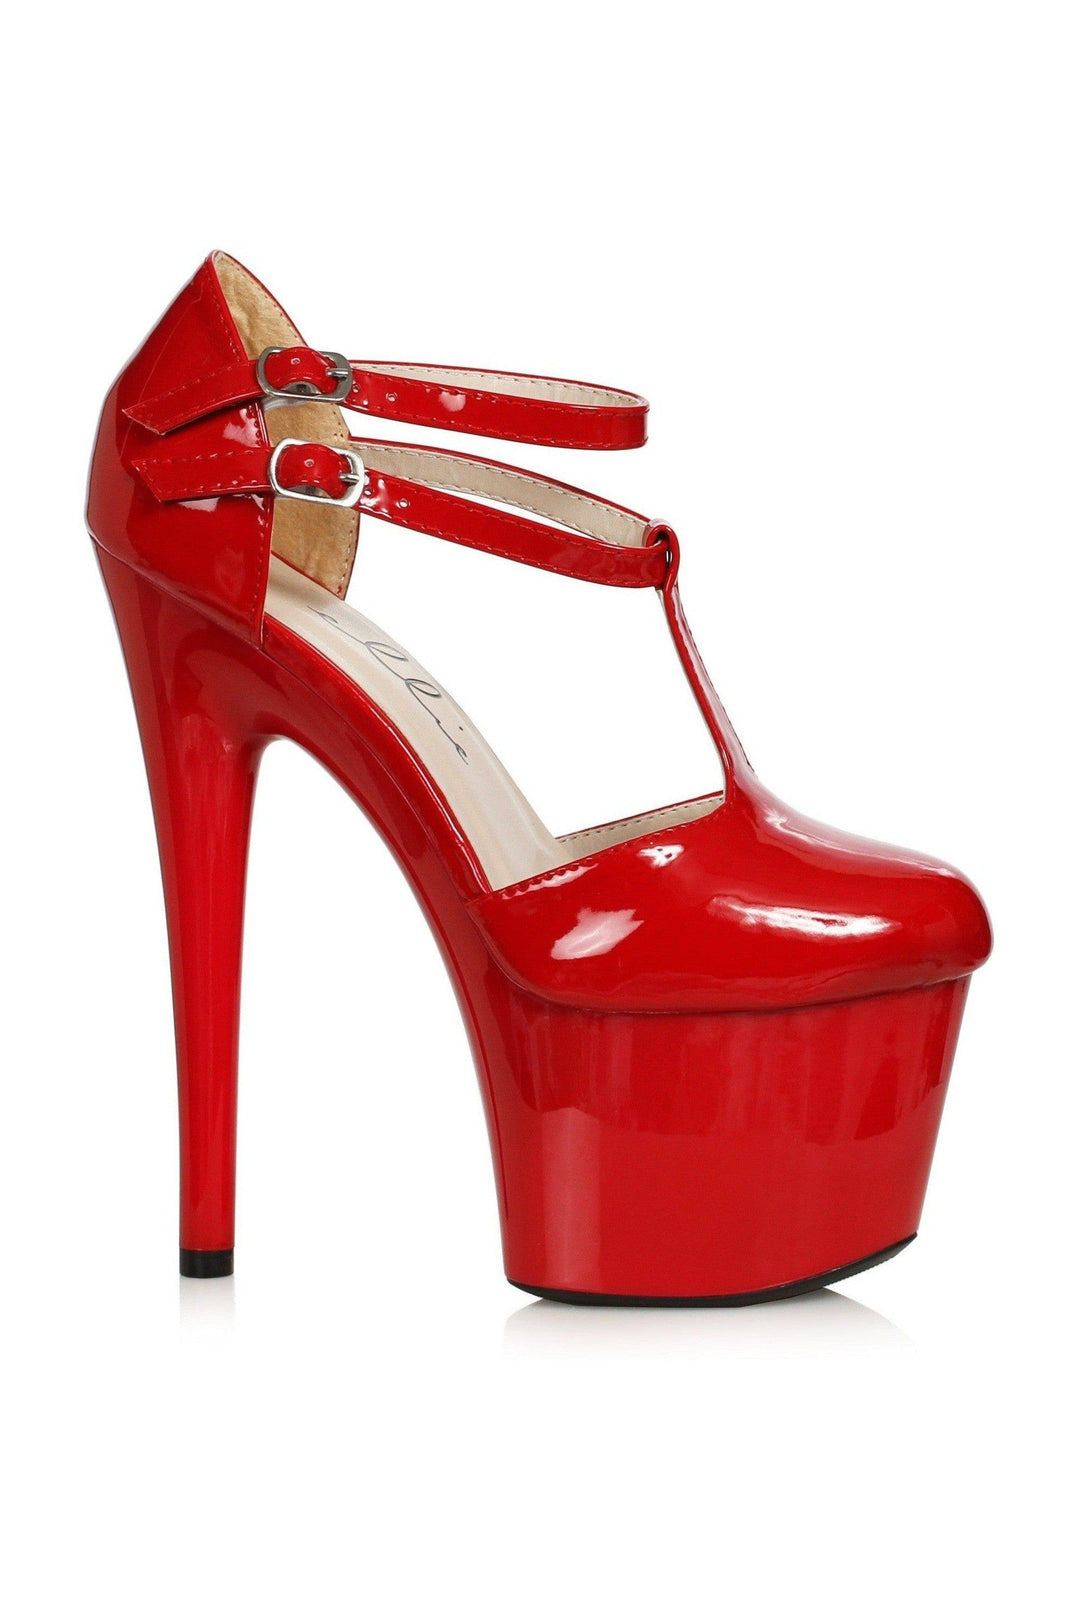 Ellie Shoes Red Pumps Platform Stripper Shoes | Buy at Sexyshoes.com